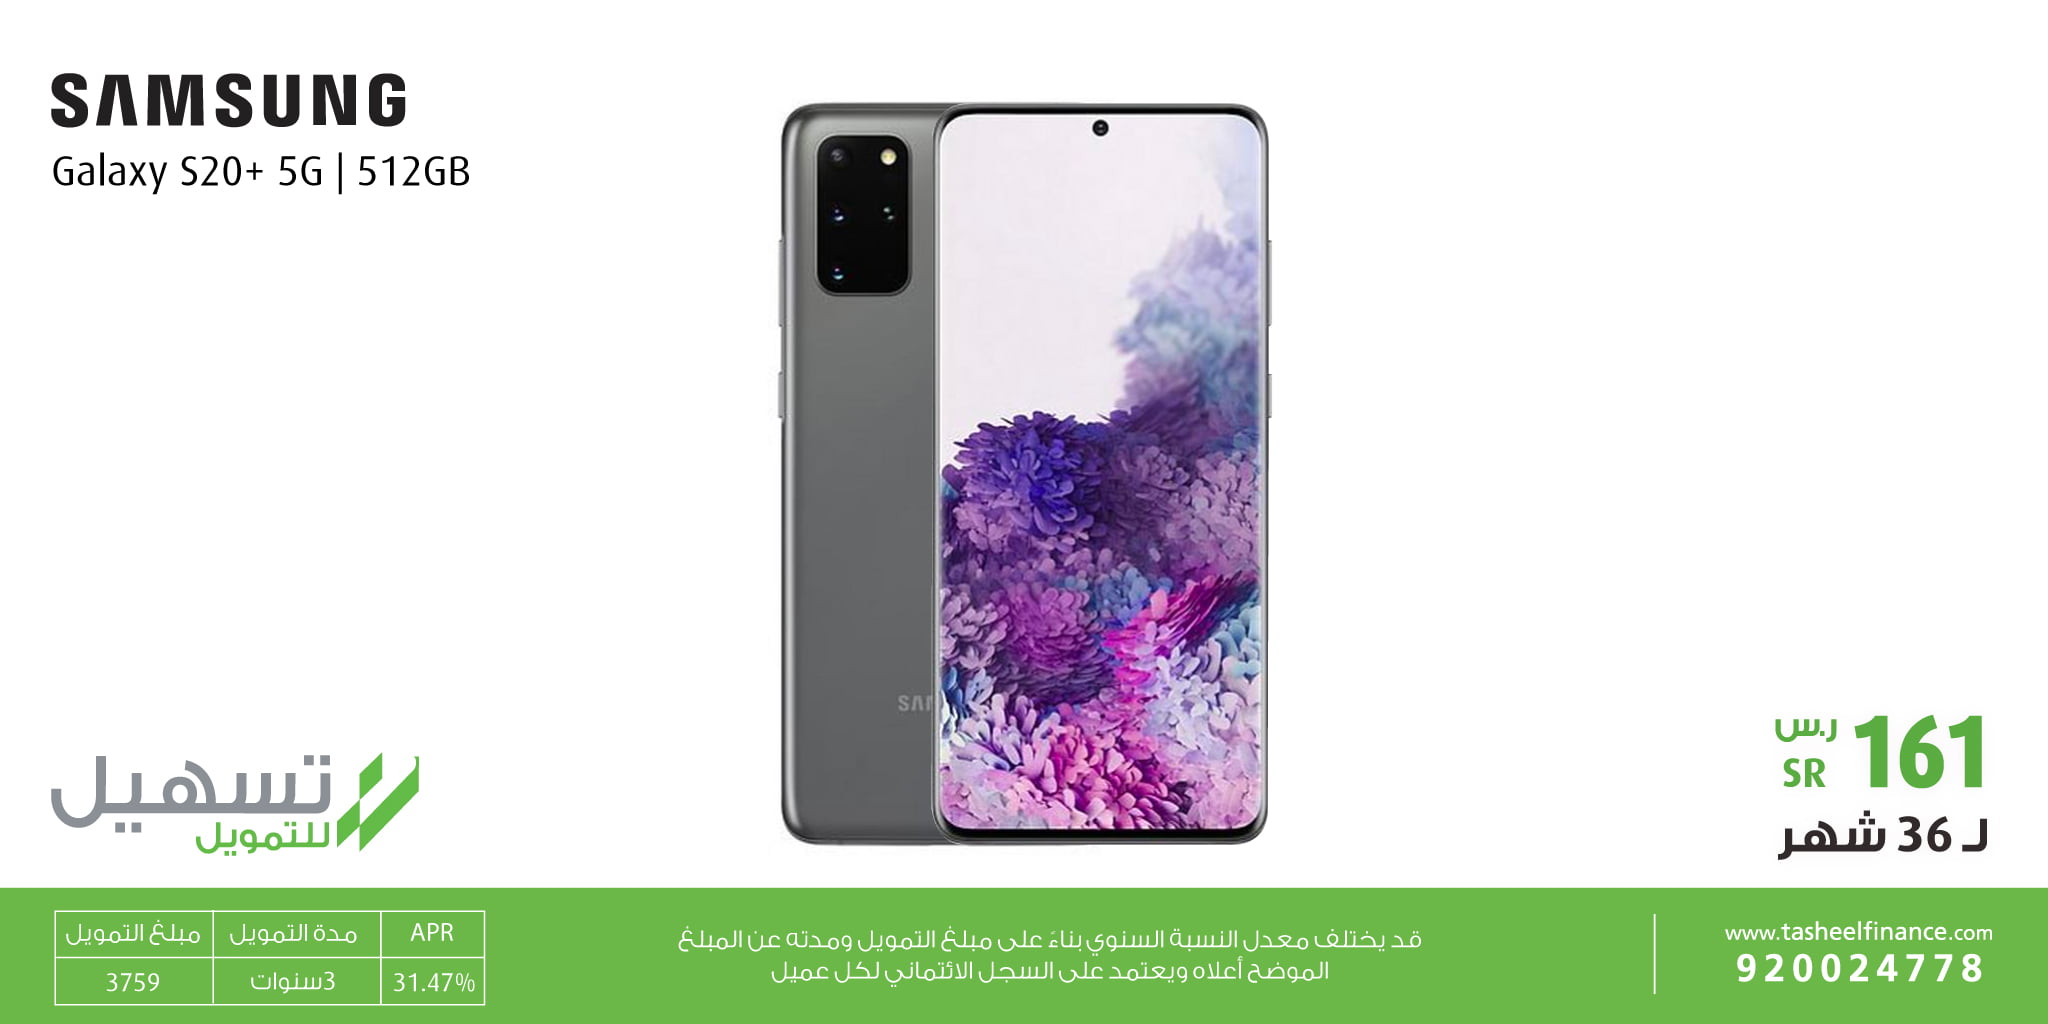 EiXOa7rU4AEgUOo - عروض اكسترا السعودية علي جوالات Samsung Galaxy S20 بالتقسيط اليوم 20-9-2020